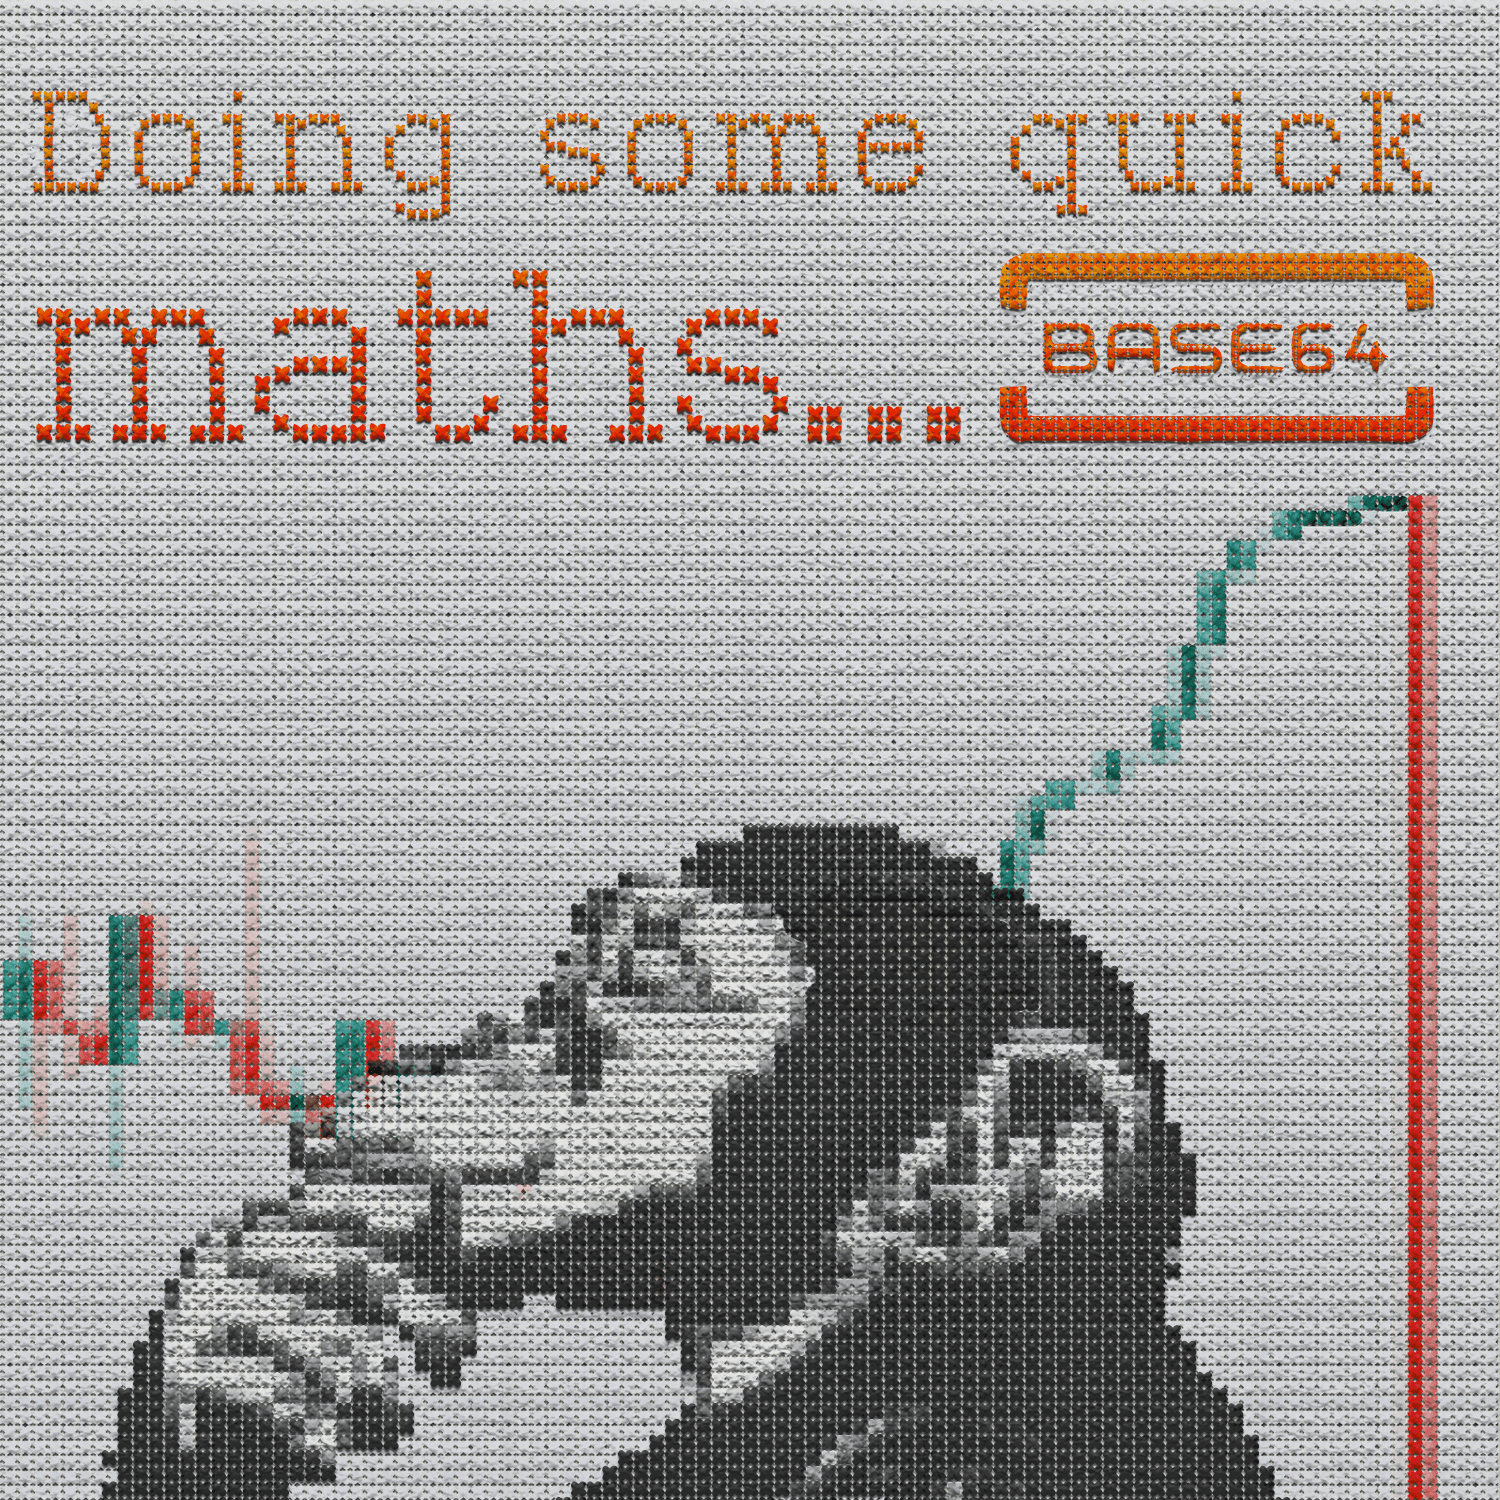 Quick Maths Cross-stitch